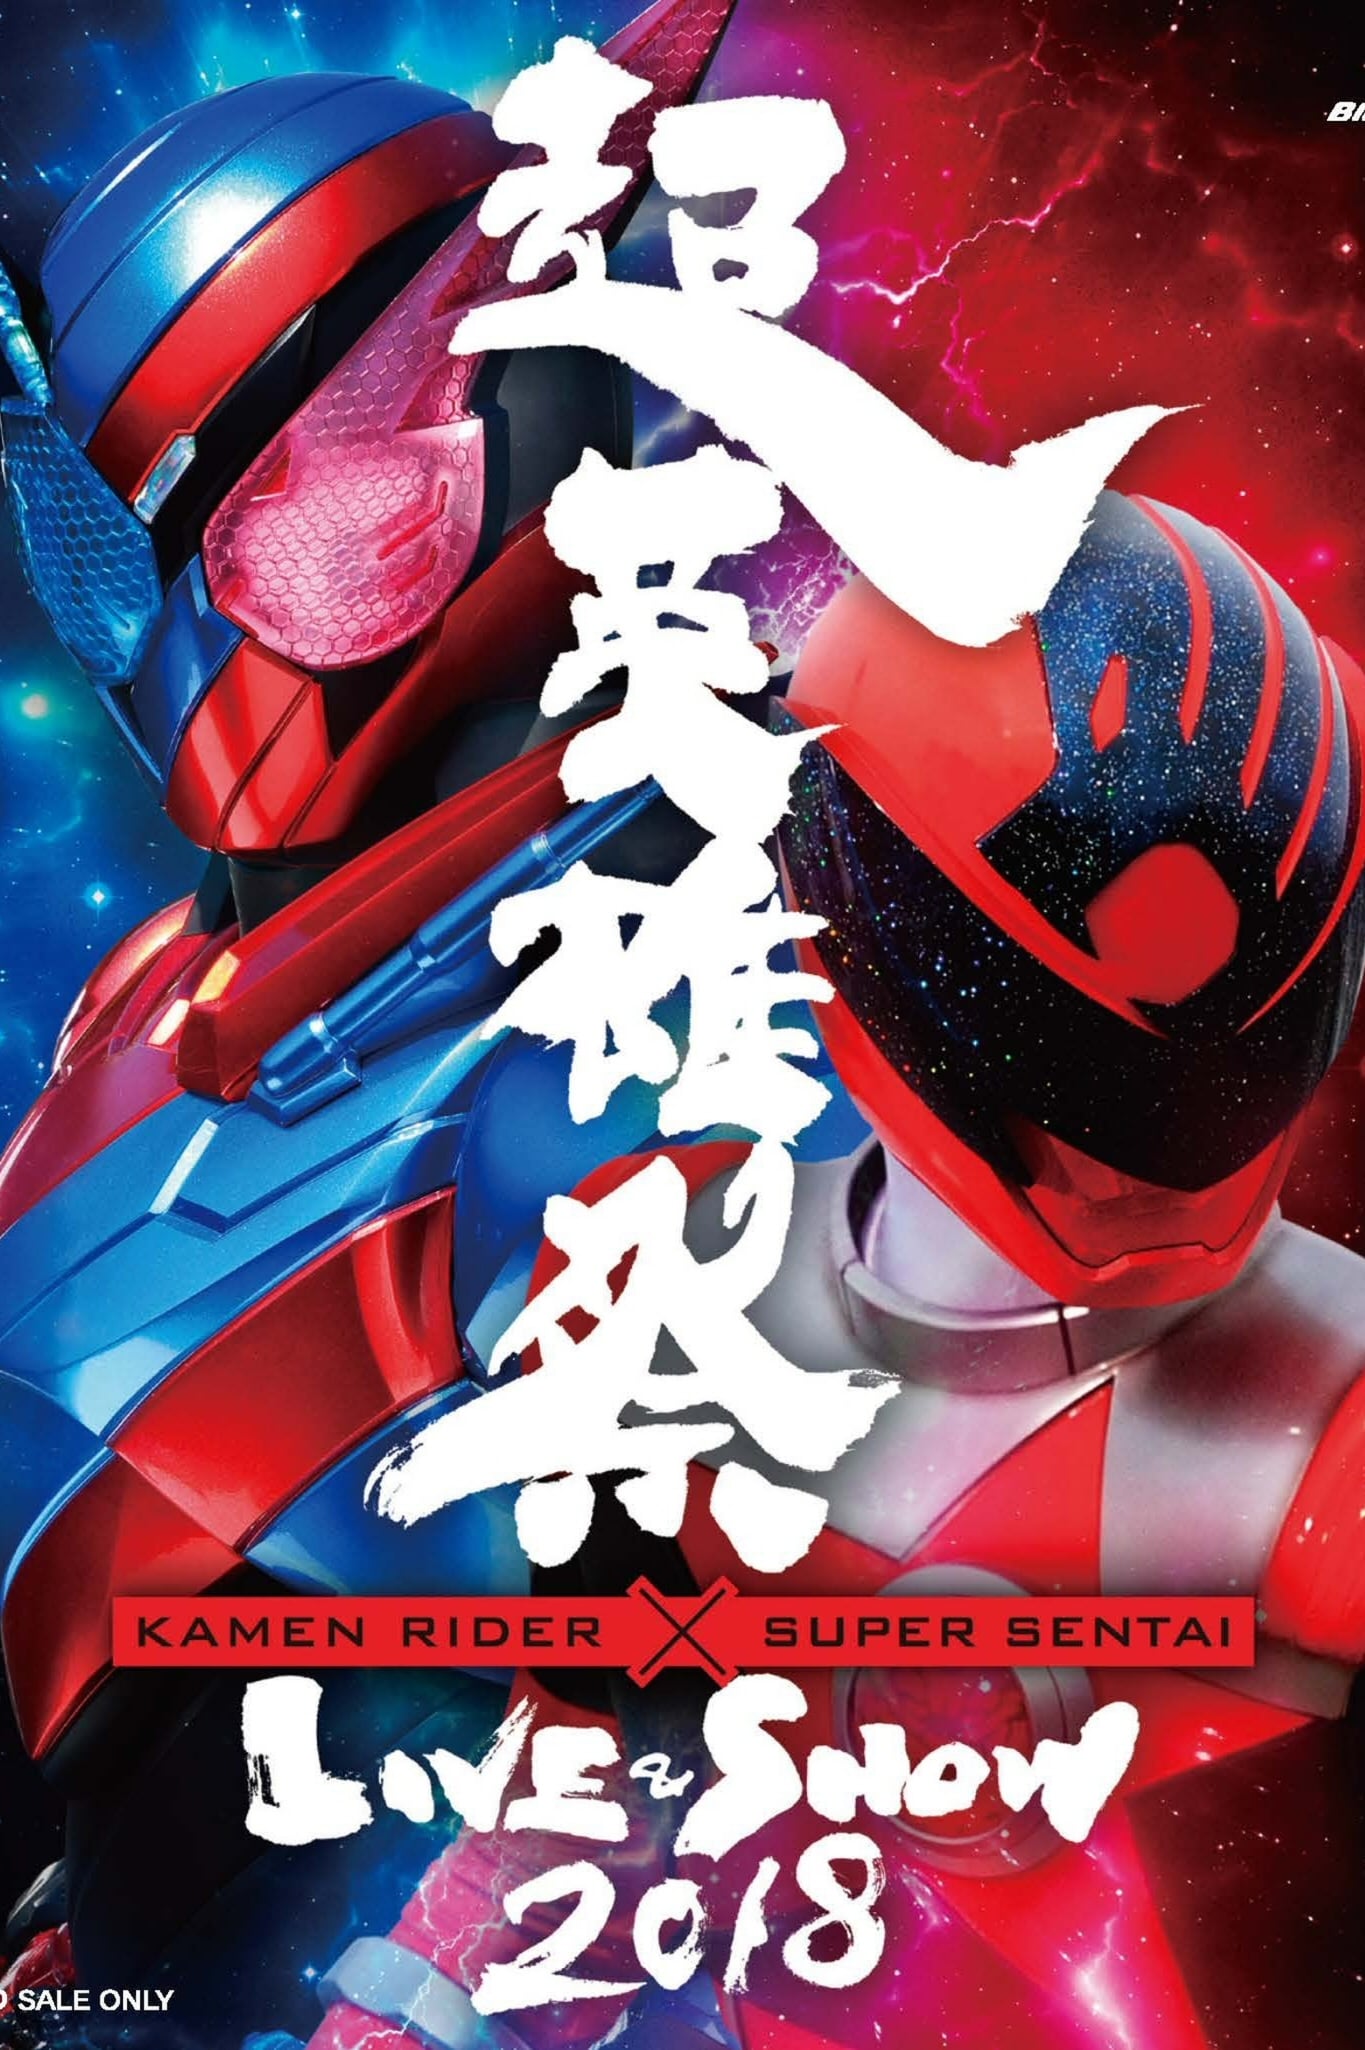 Super Hero Festival: Kamen Rider × Super Sentai Live & Show 2018 (2018)